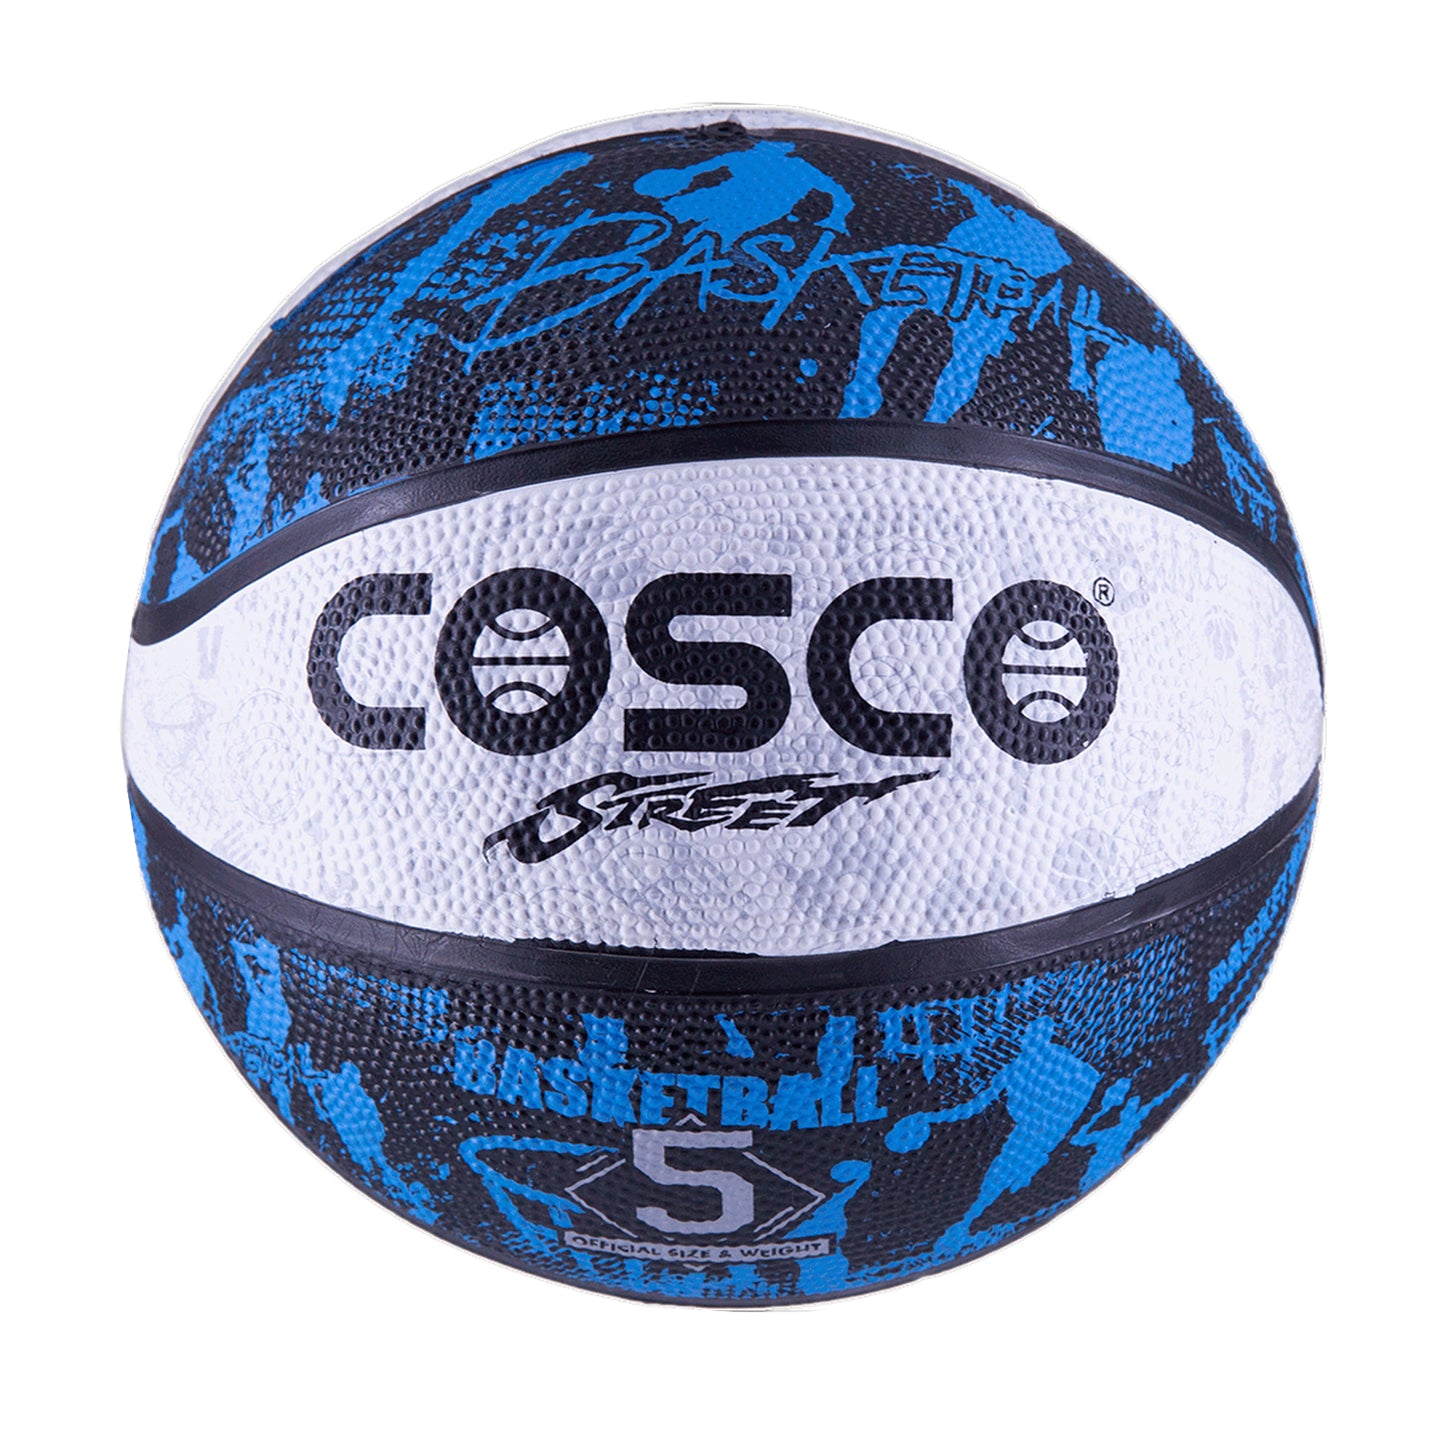 Cosco Street Basketball, Size 5 (Blue/Black/White) - Best Price online Prokicksports.com